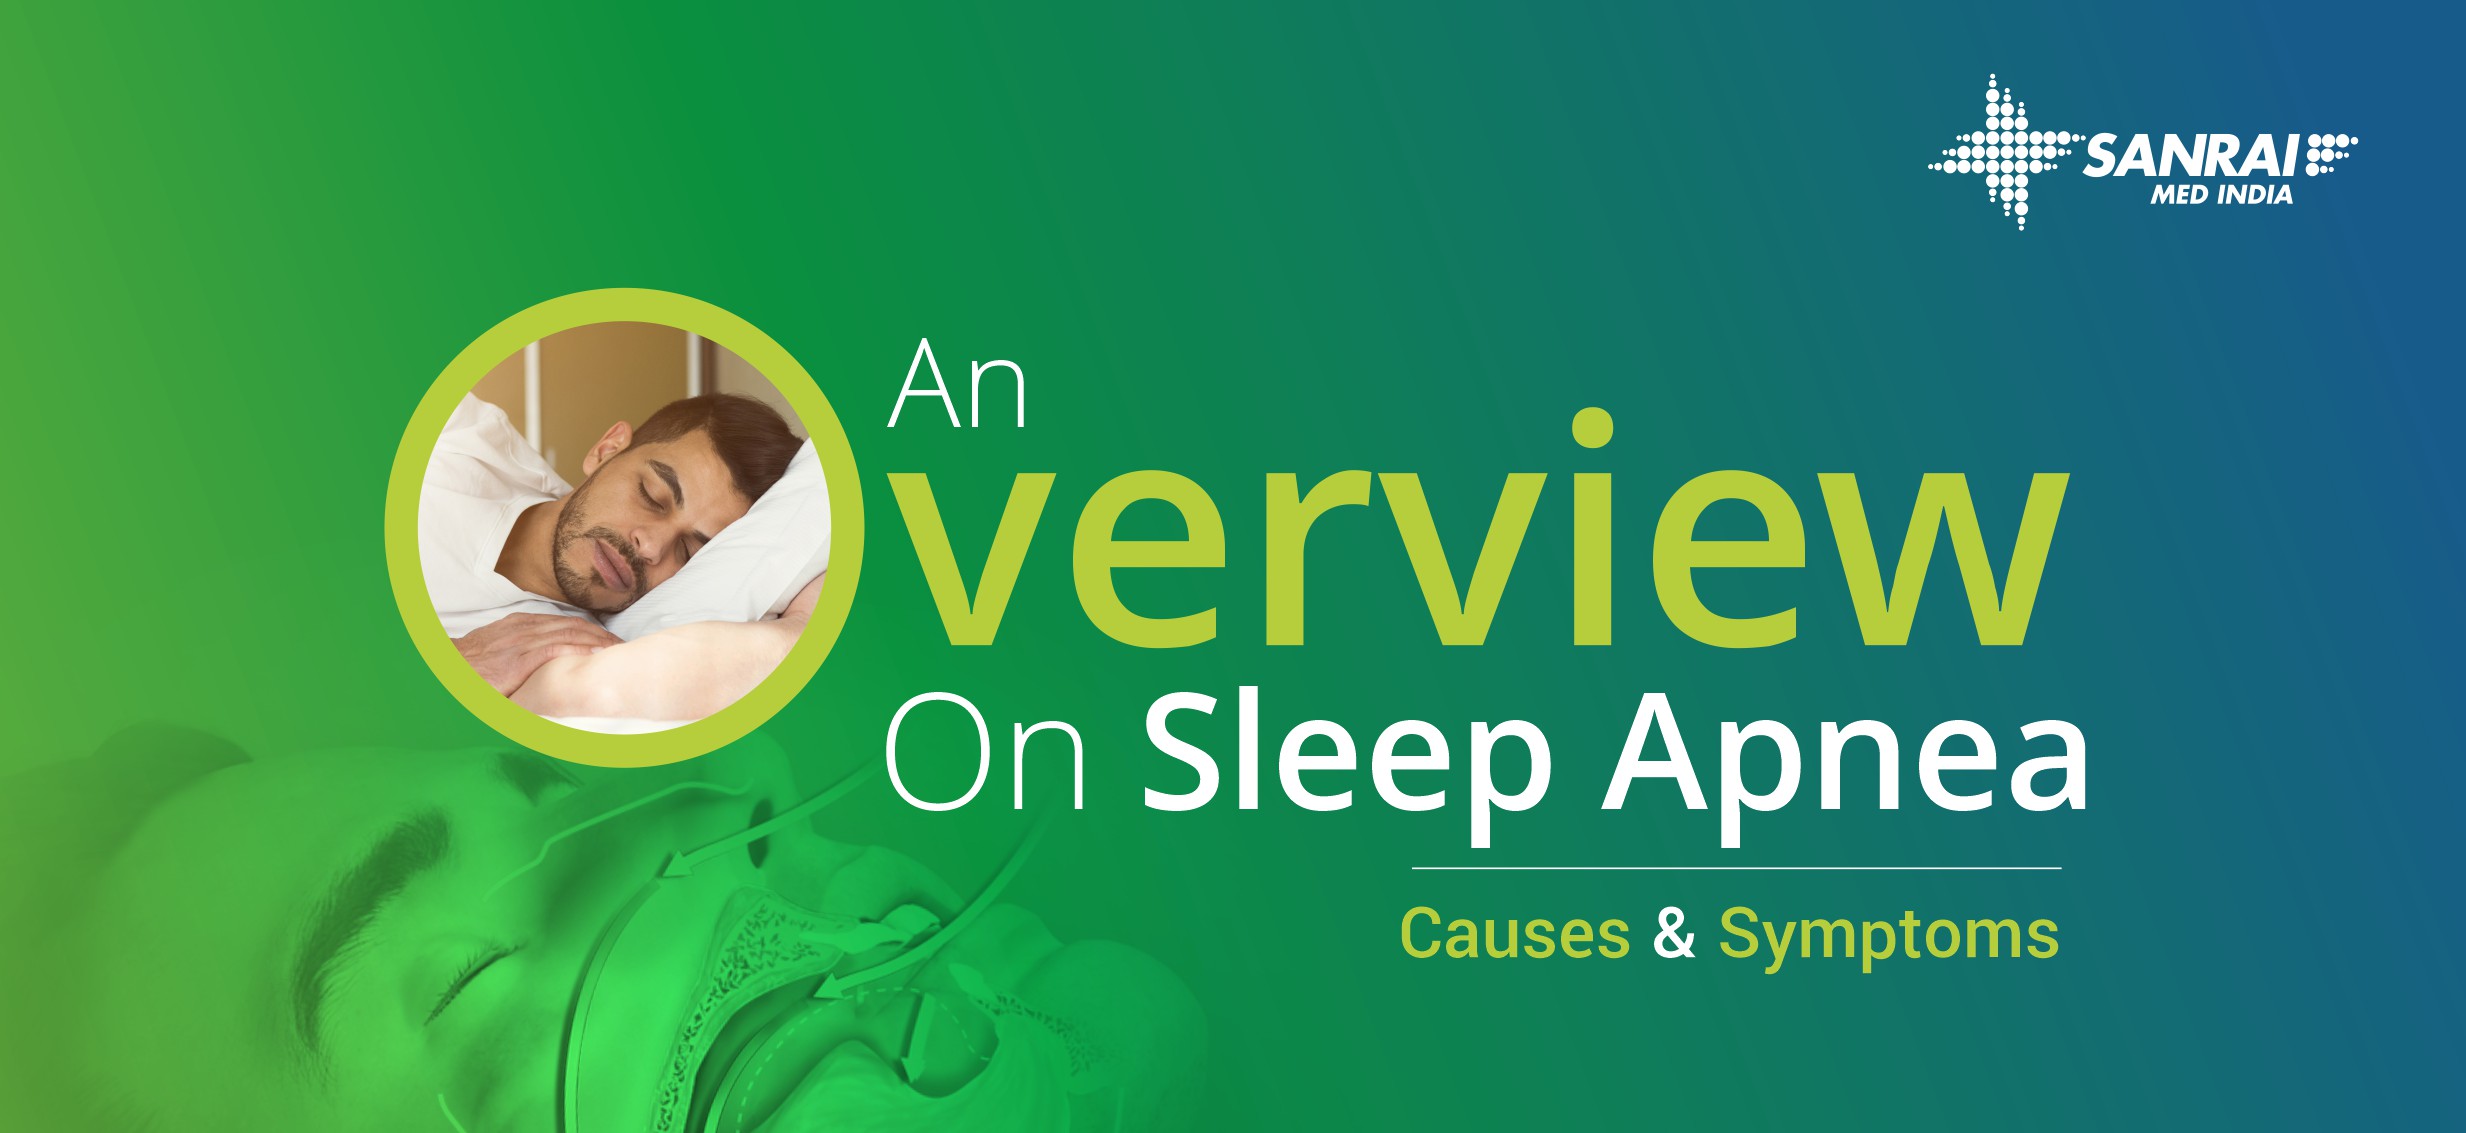 An Overview On Sleep Apnea - Causes & Symptoms